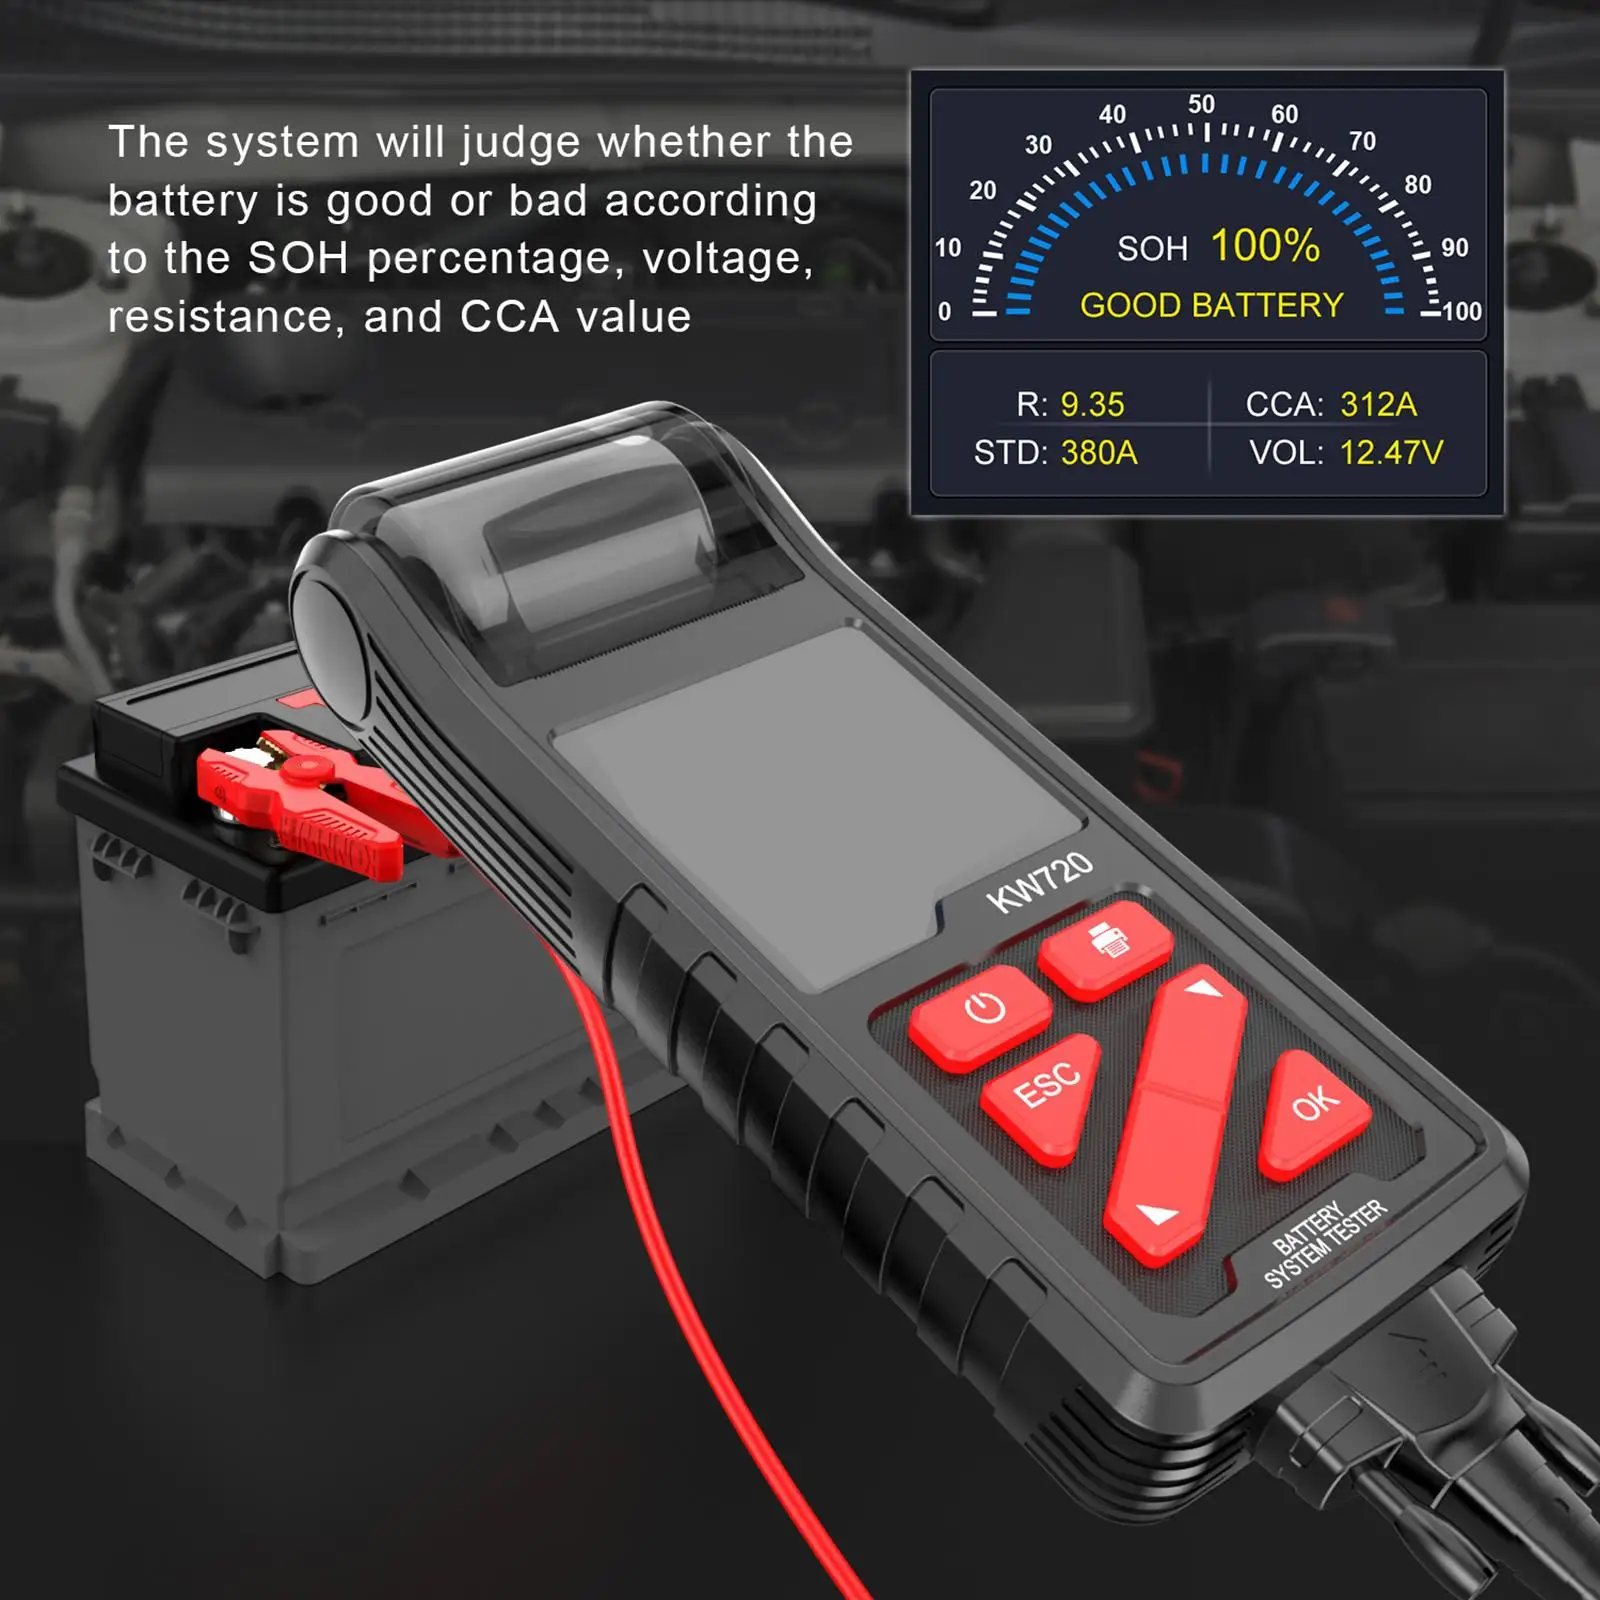 KW720 Car Battery Tester with Printer 6V 12V 24V Battery Health Analyzer for Cars ATV SUV Starting and Charging System